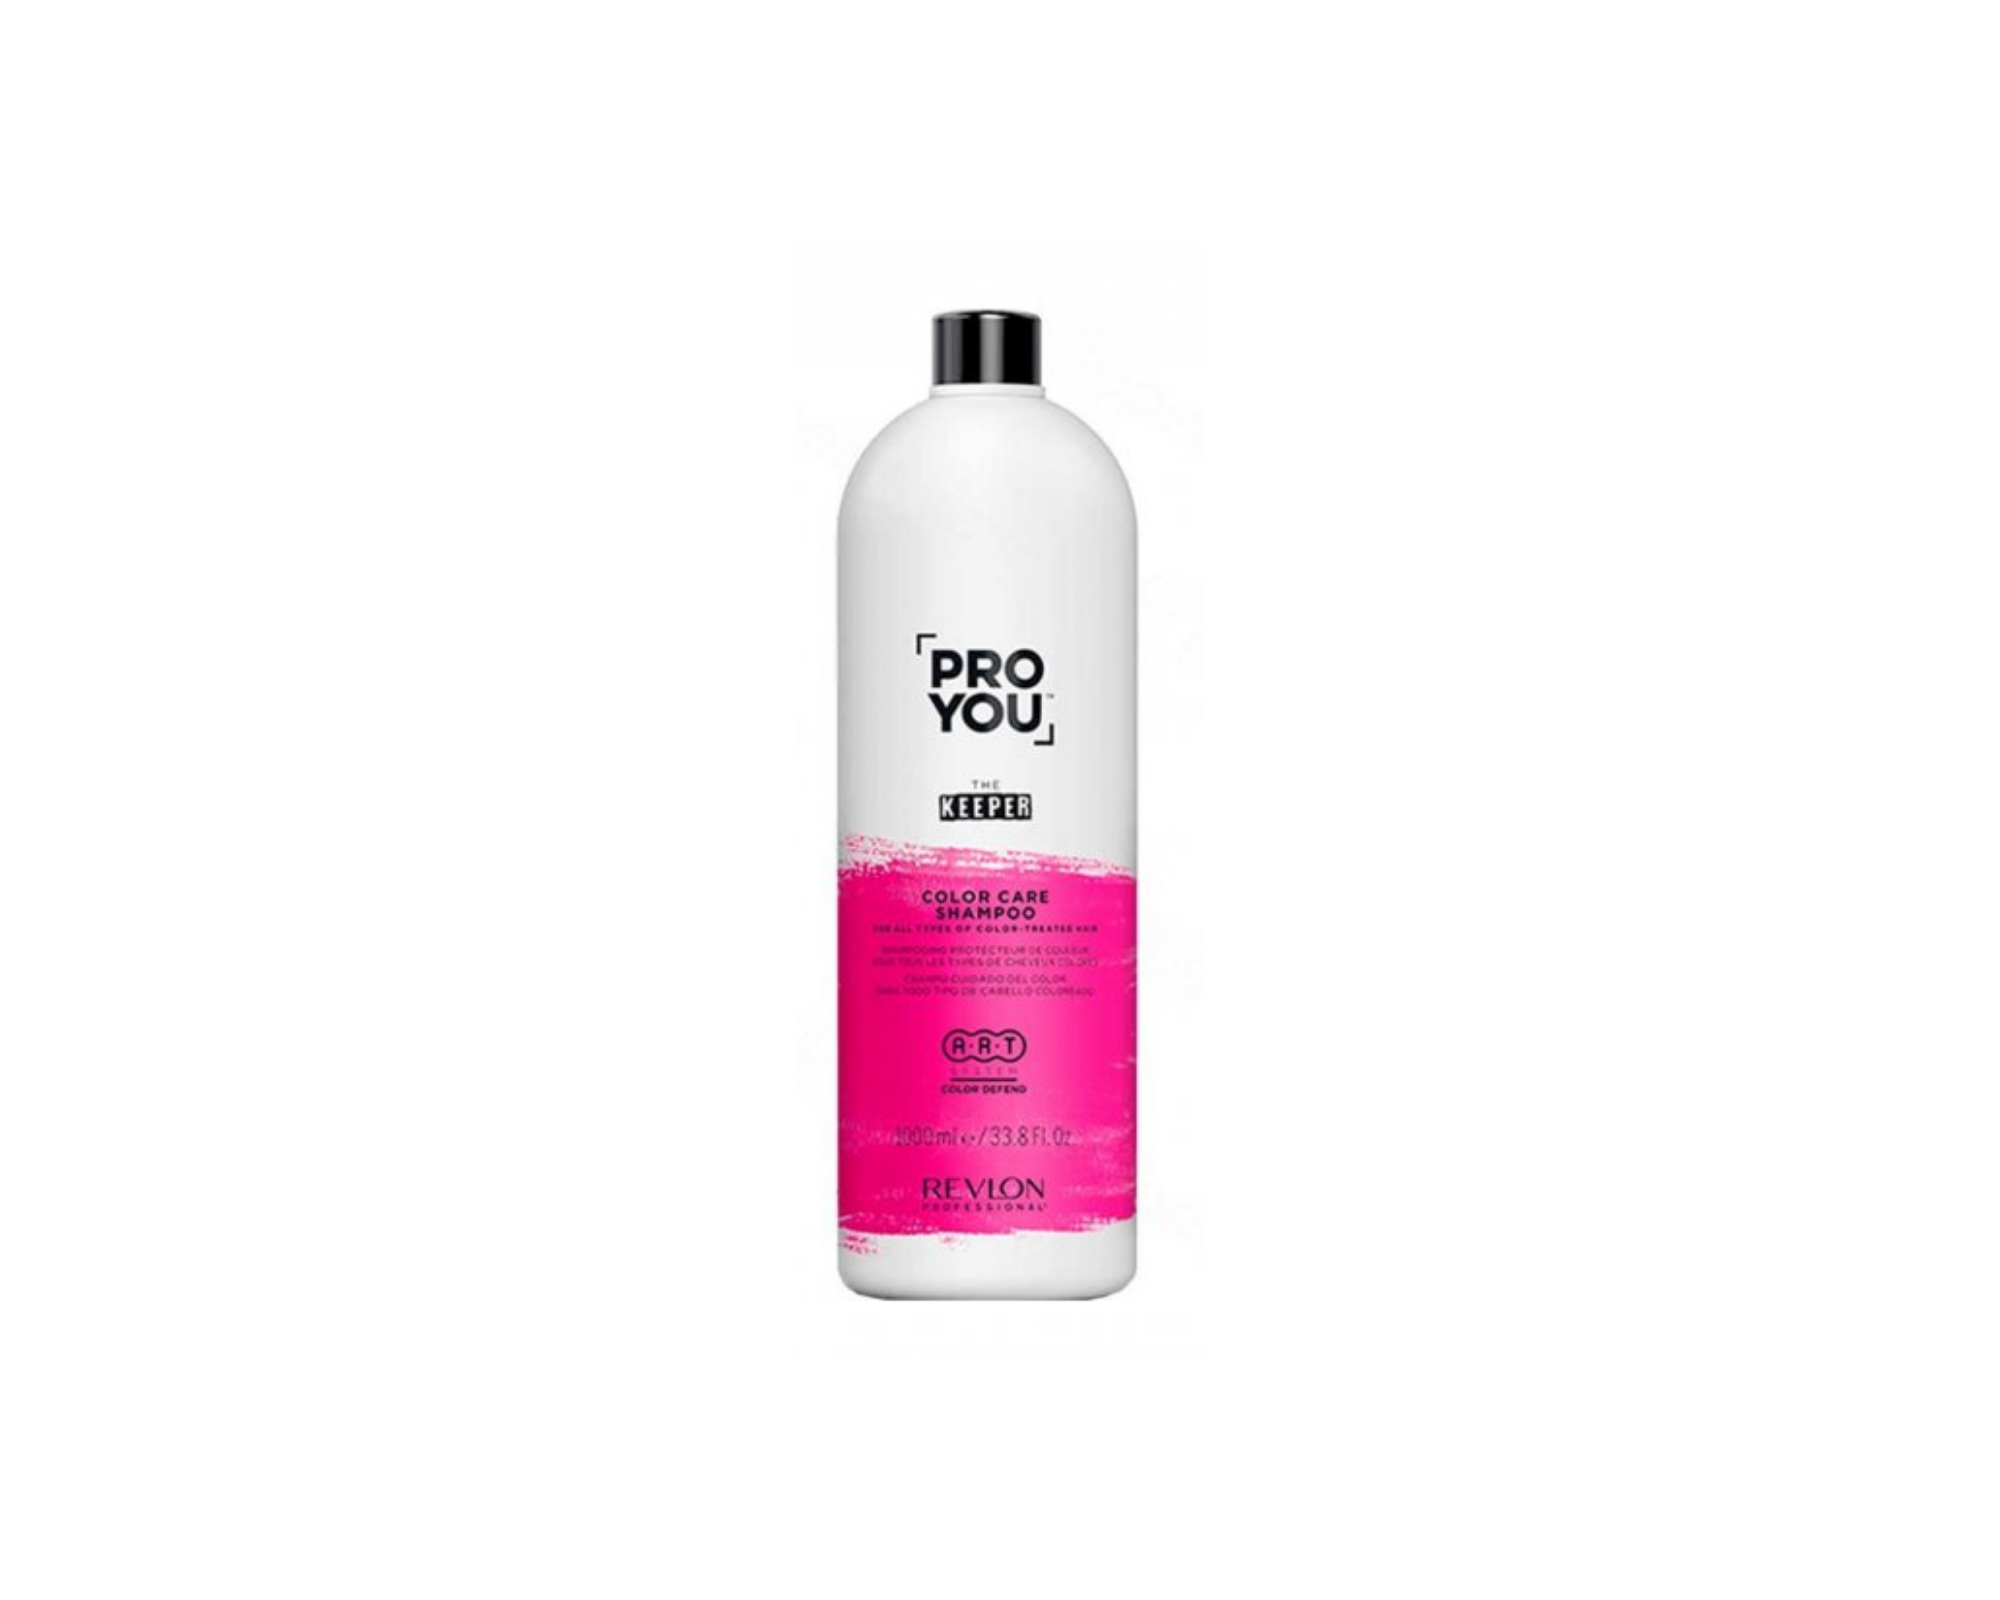 Revlon Pro You Color Care Shampoo - "The Keeper"